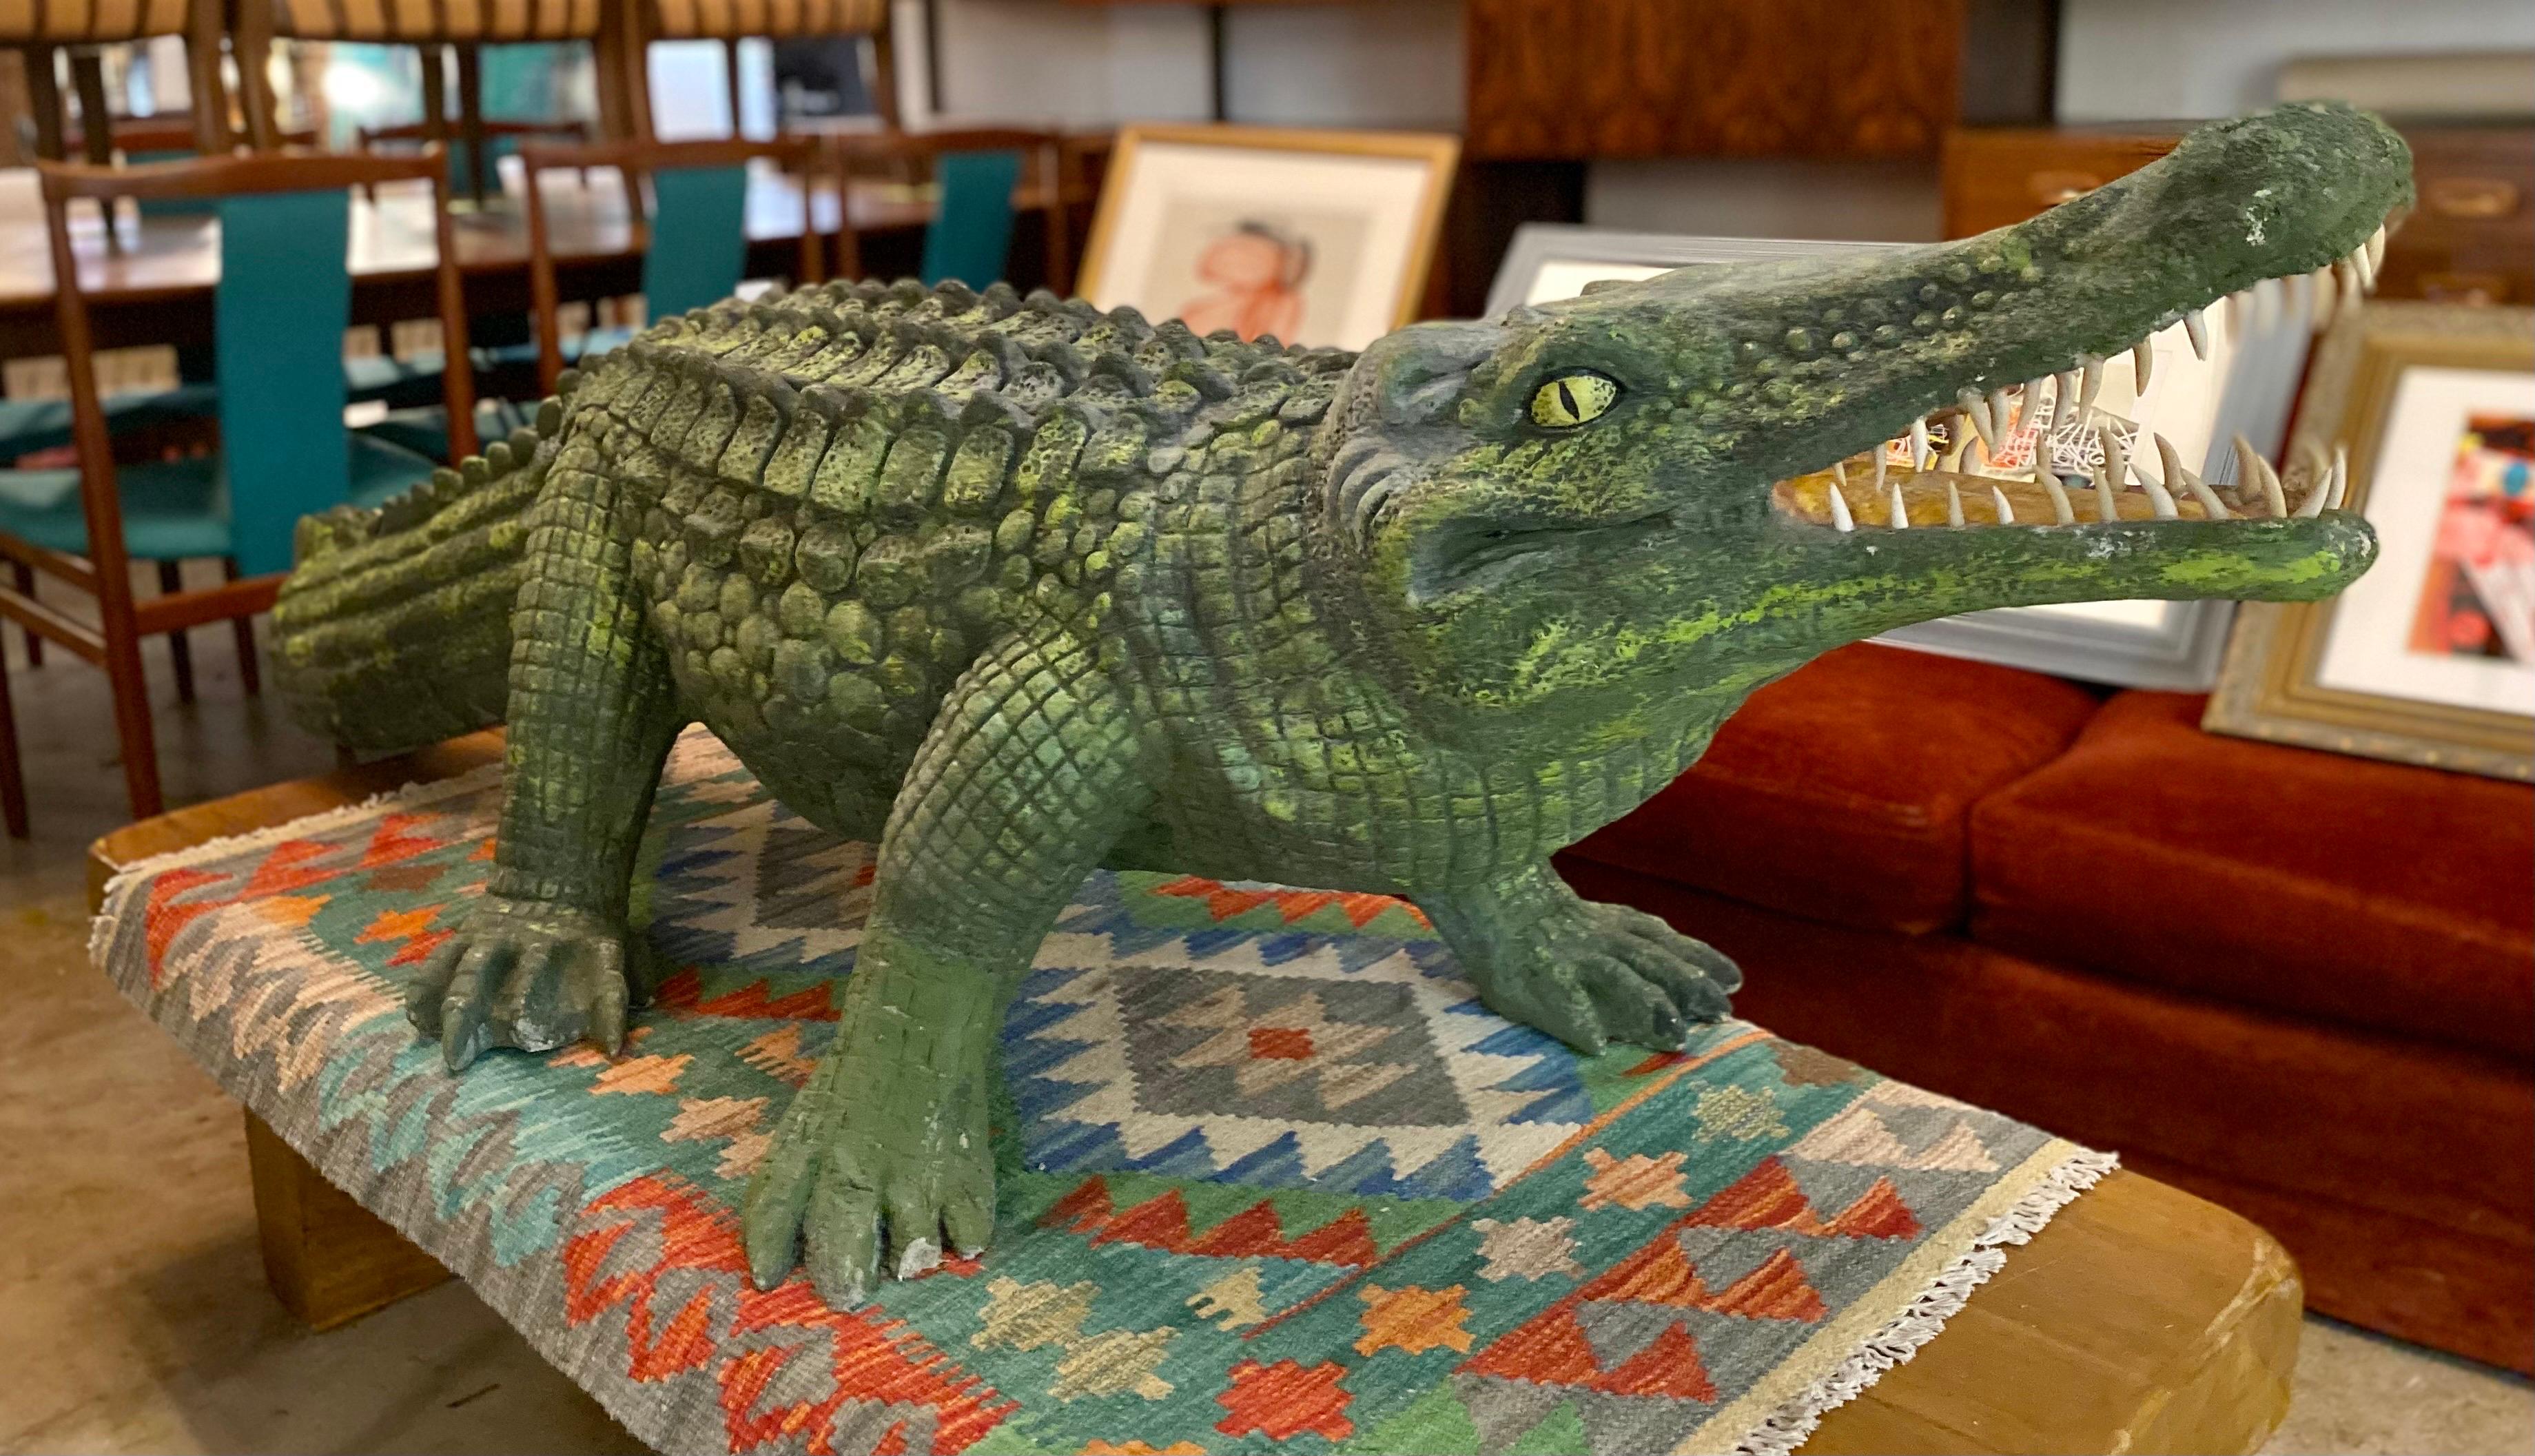 Other Large Concrete Alligator Garden Sculpture For Sale